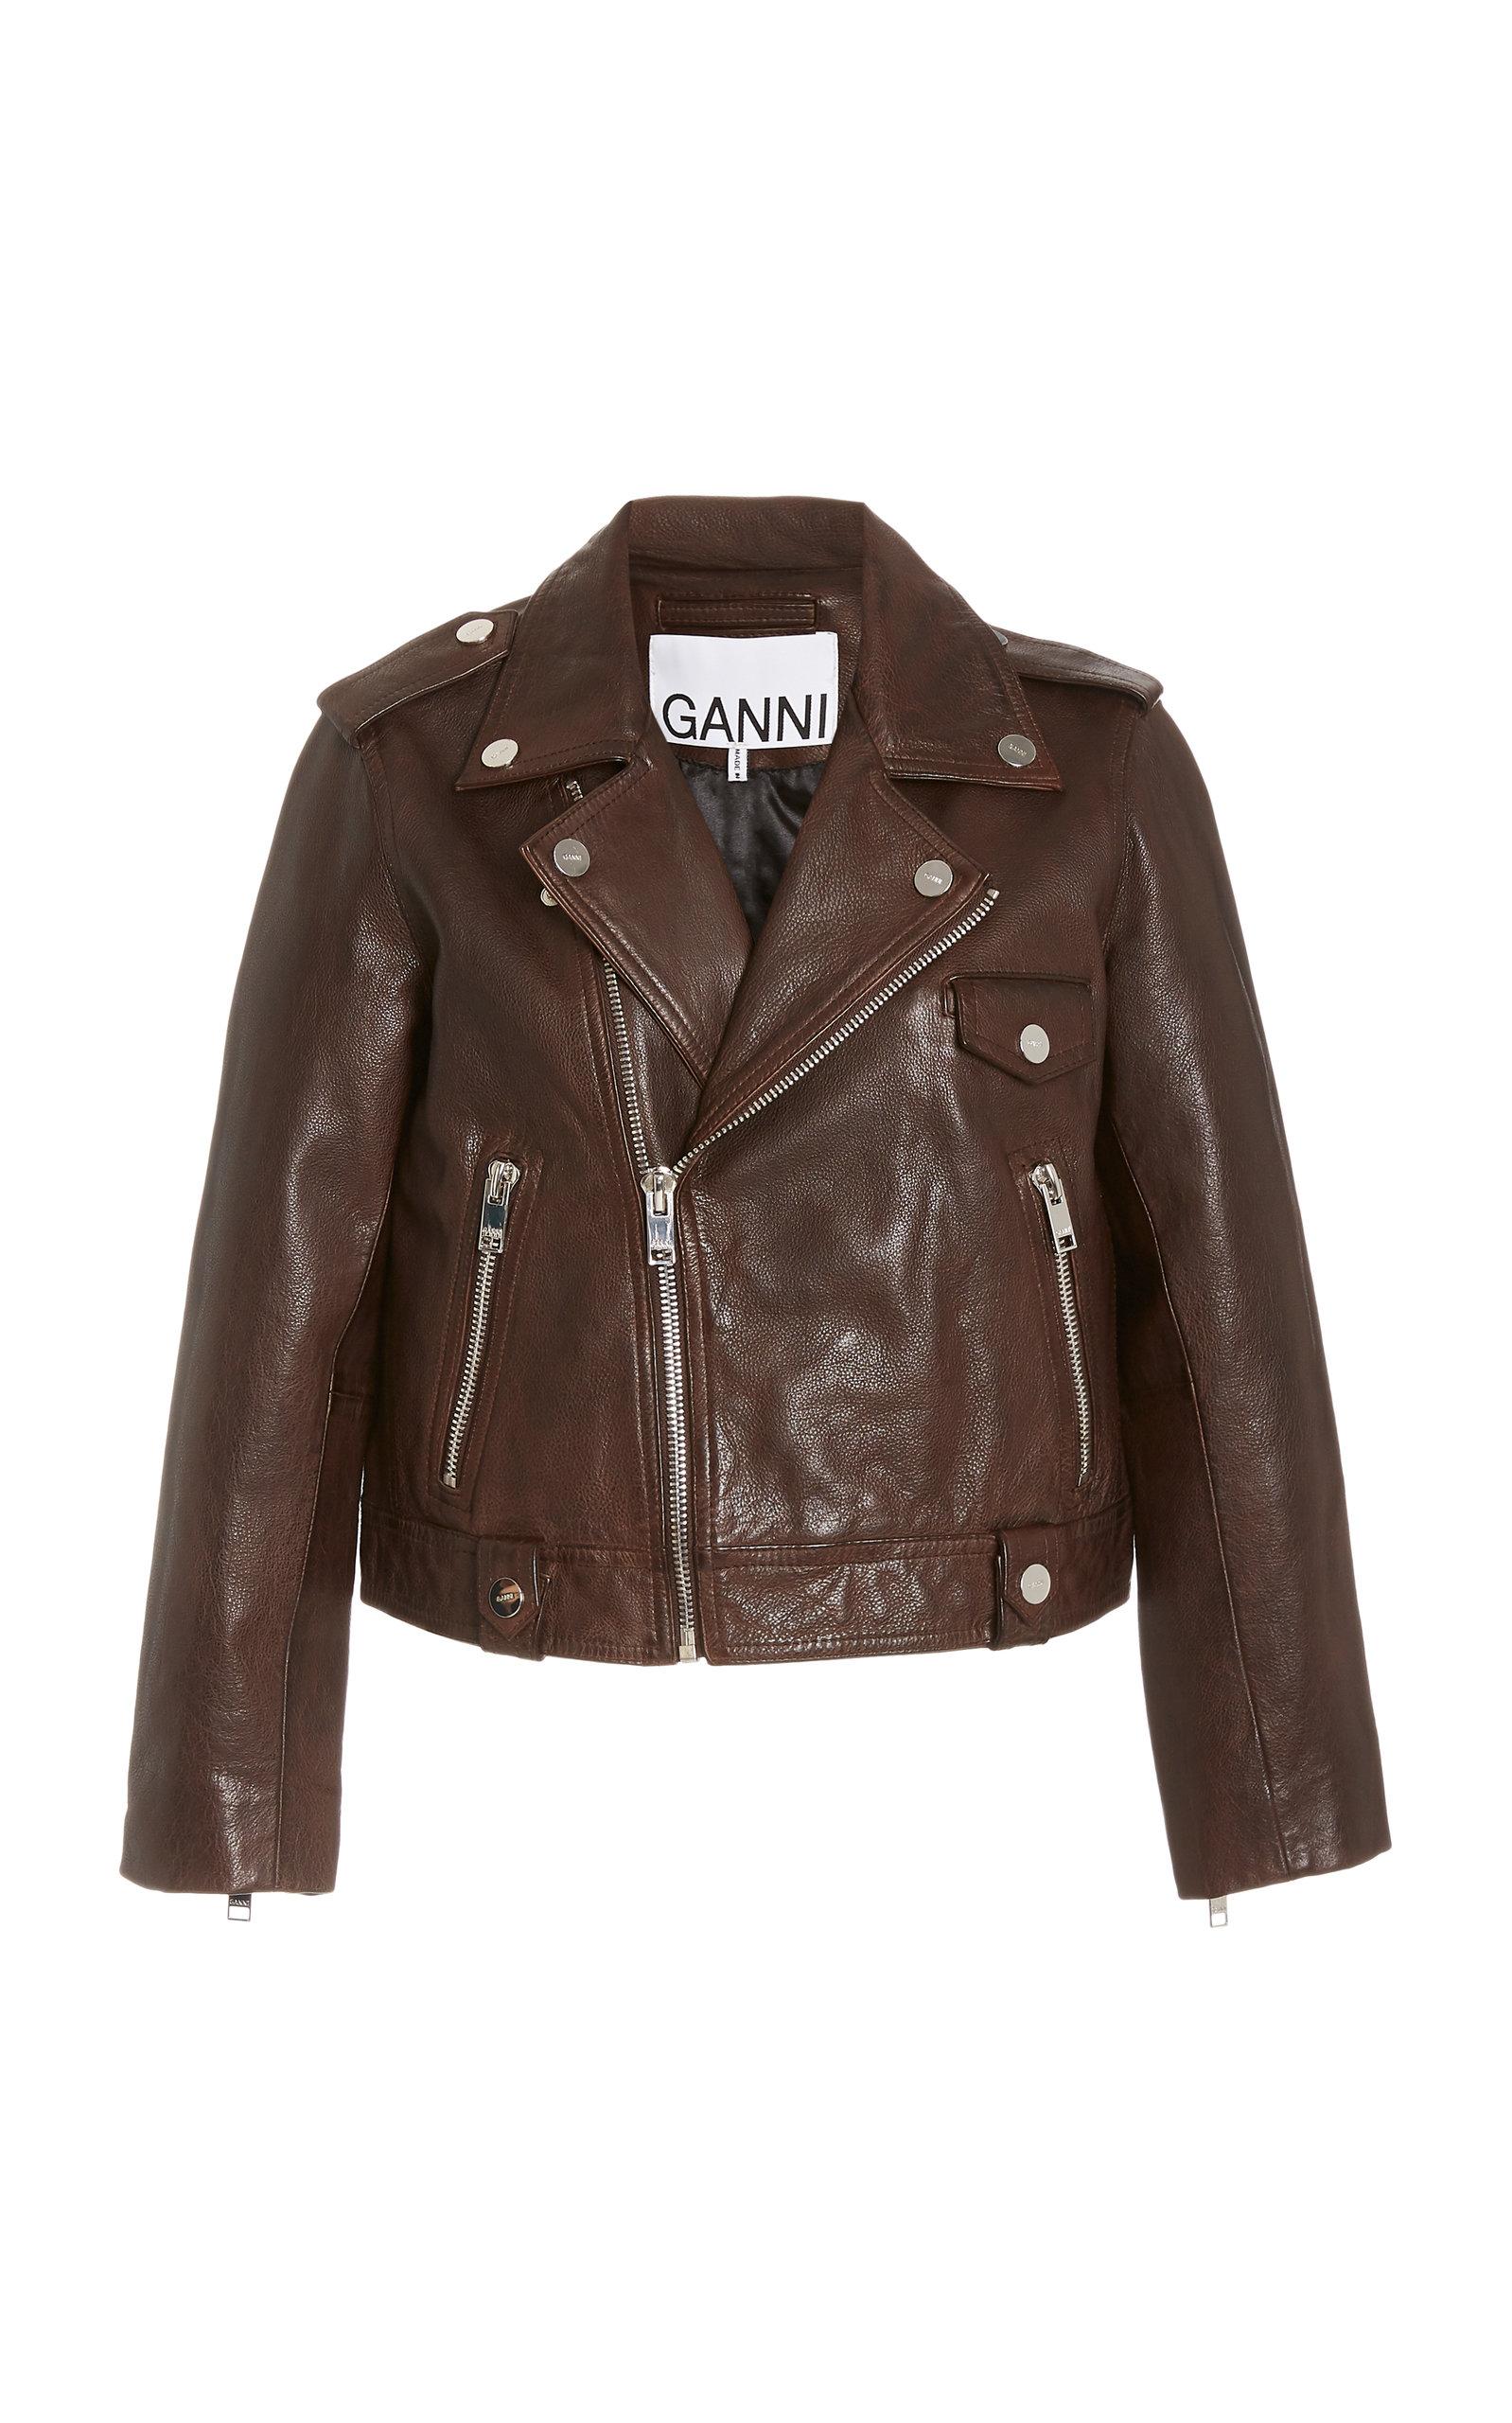 Ganni Light Grain Leather Jacket in Brown - Lyst